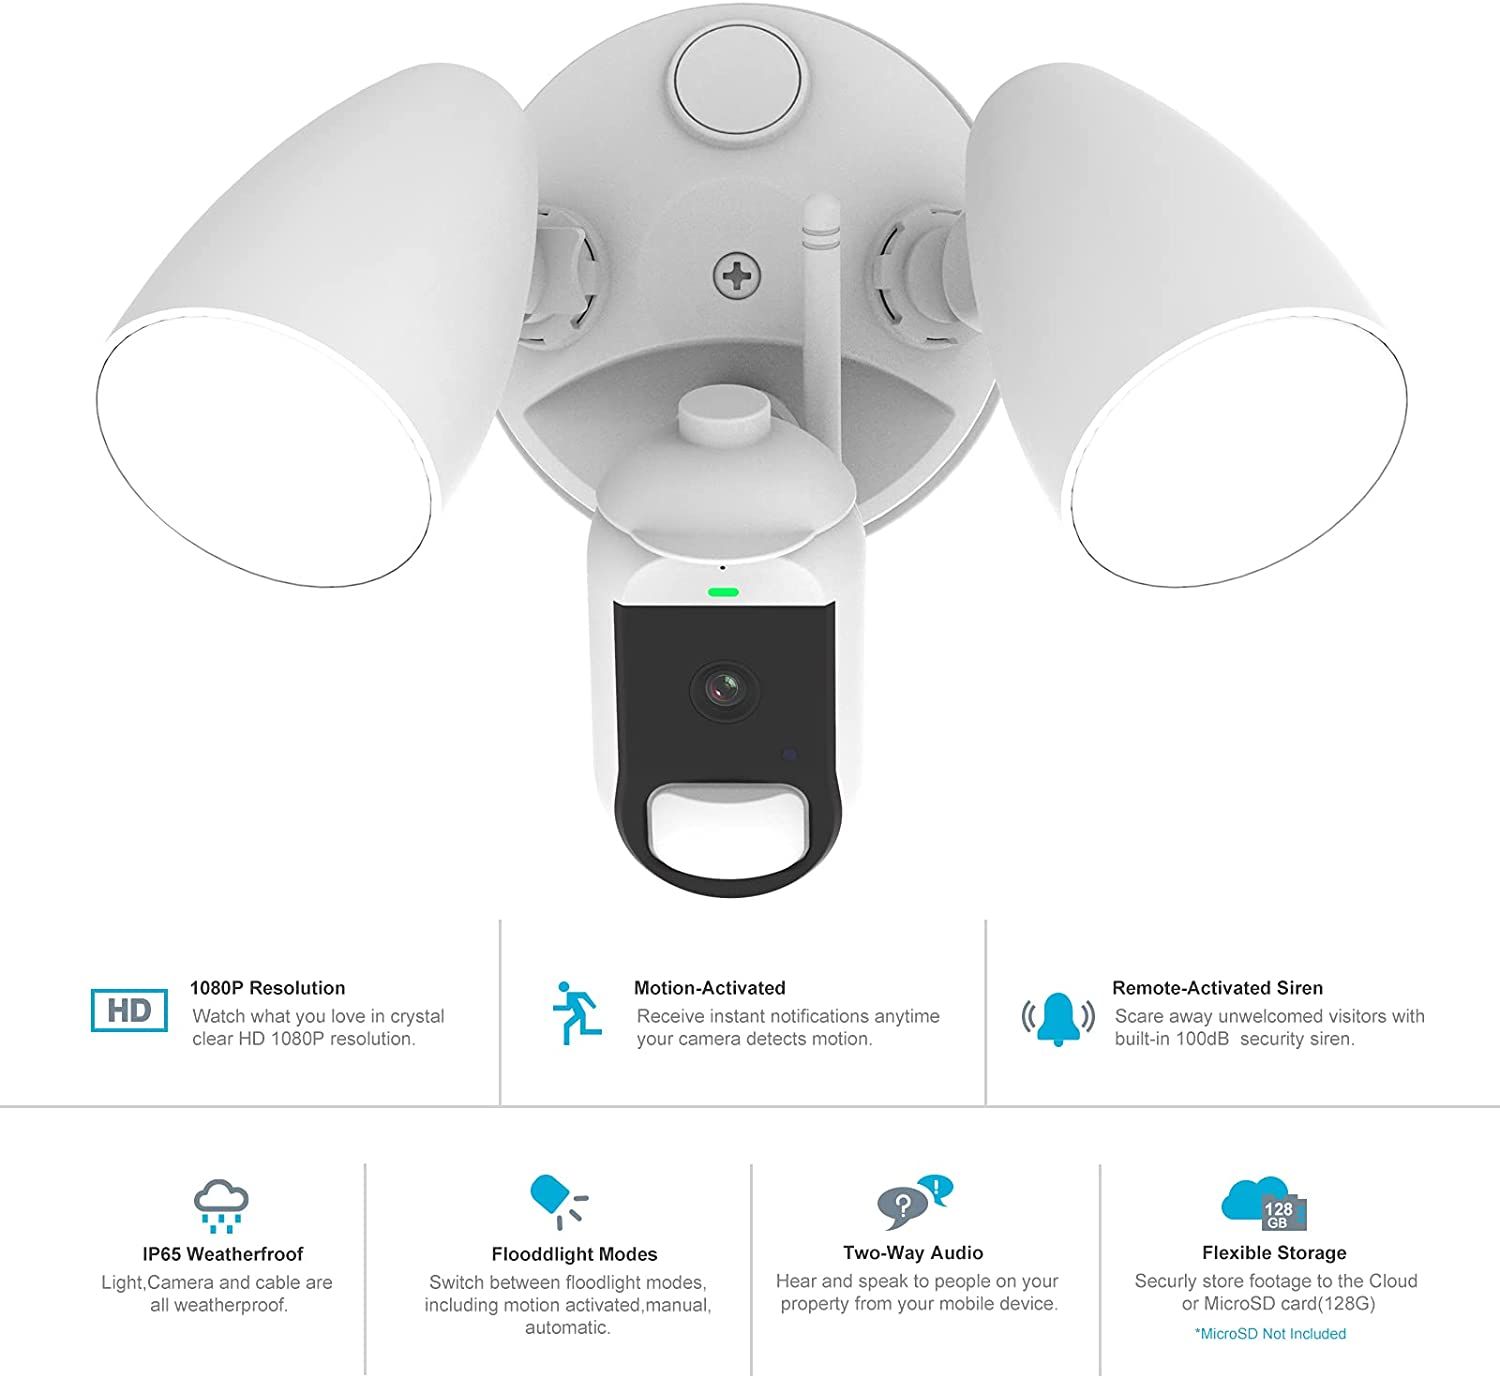 Snoeir Smart Floodlight Camera home security features